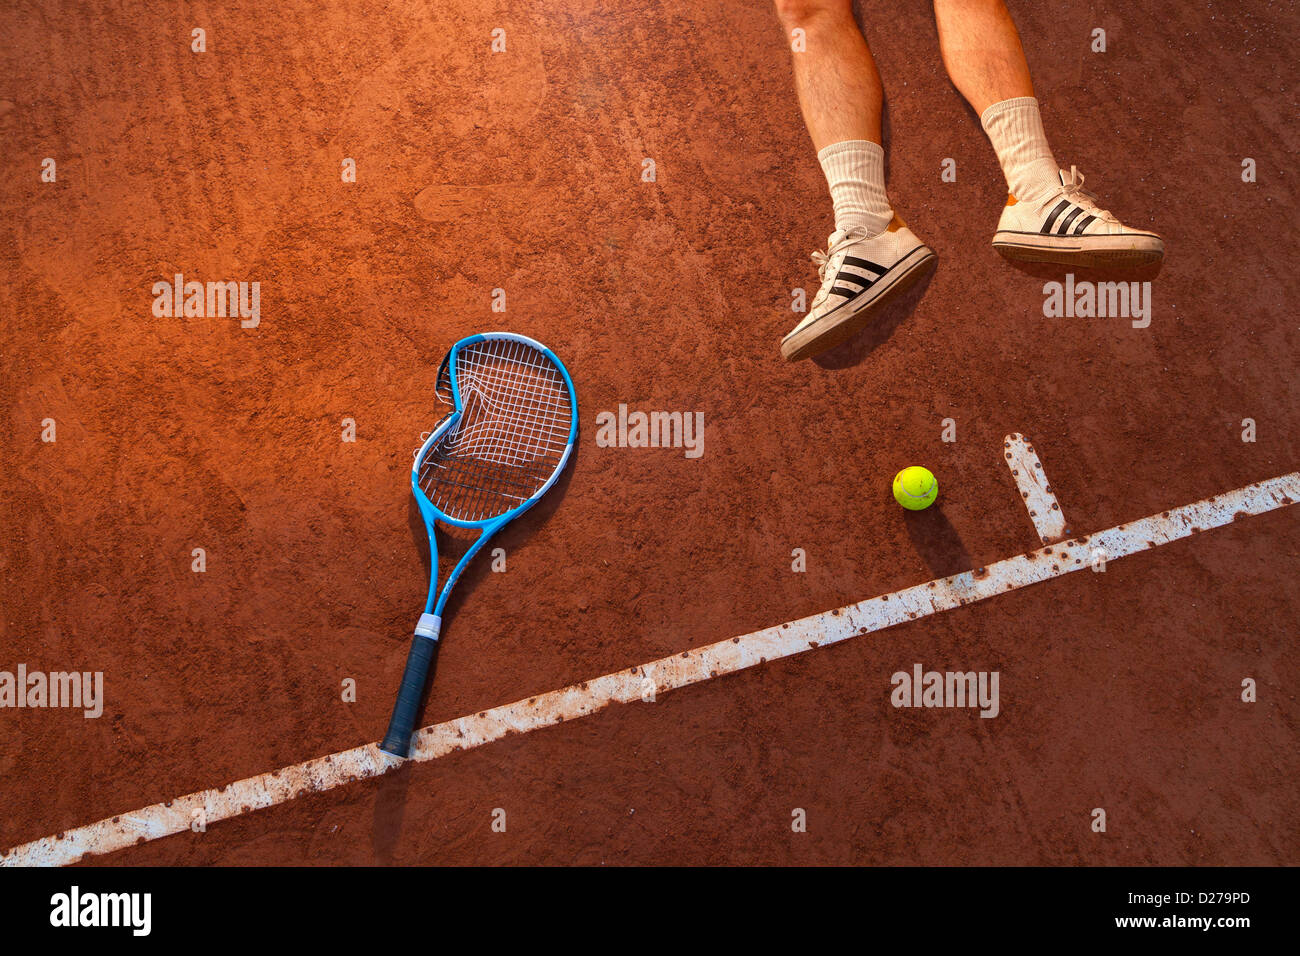 Tennis match point Stock Photo